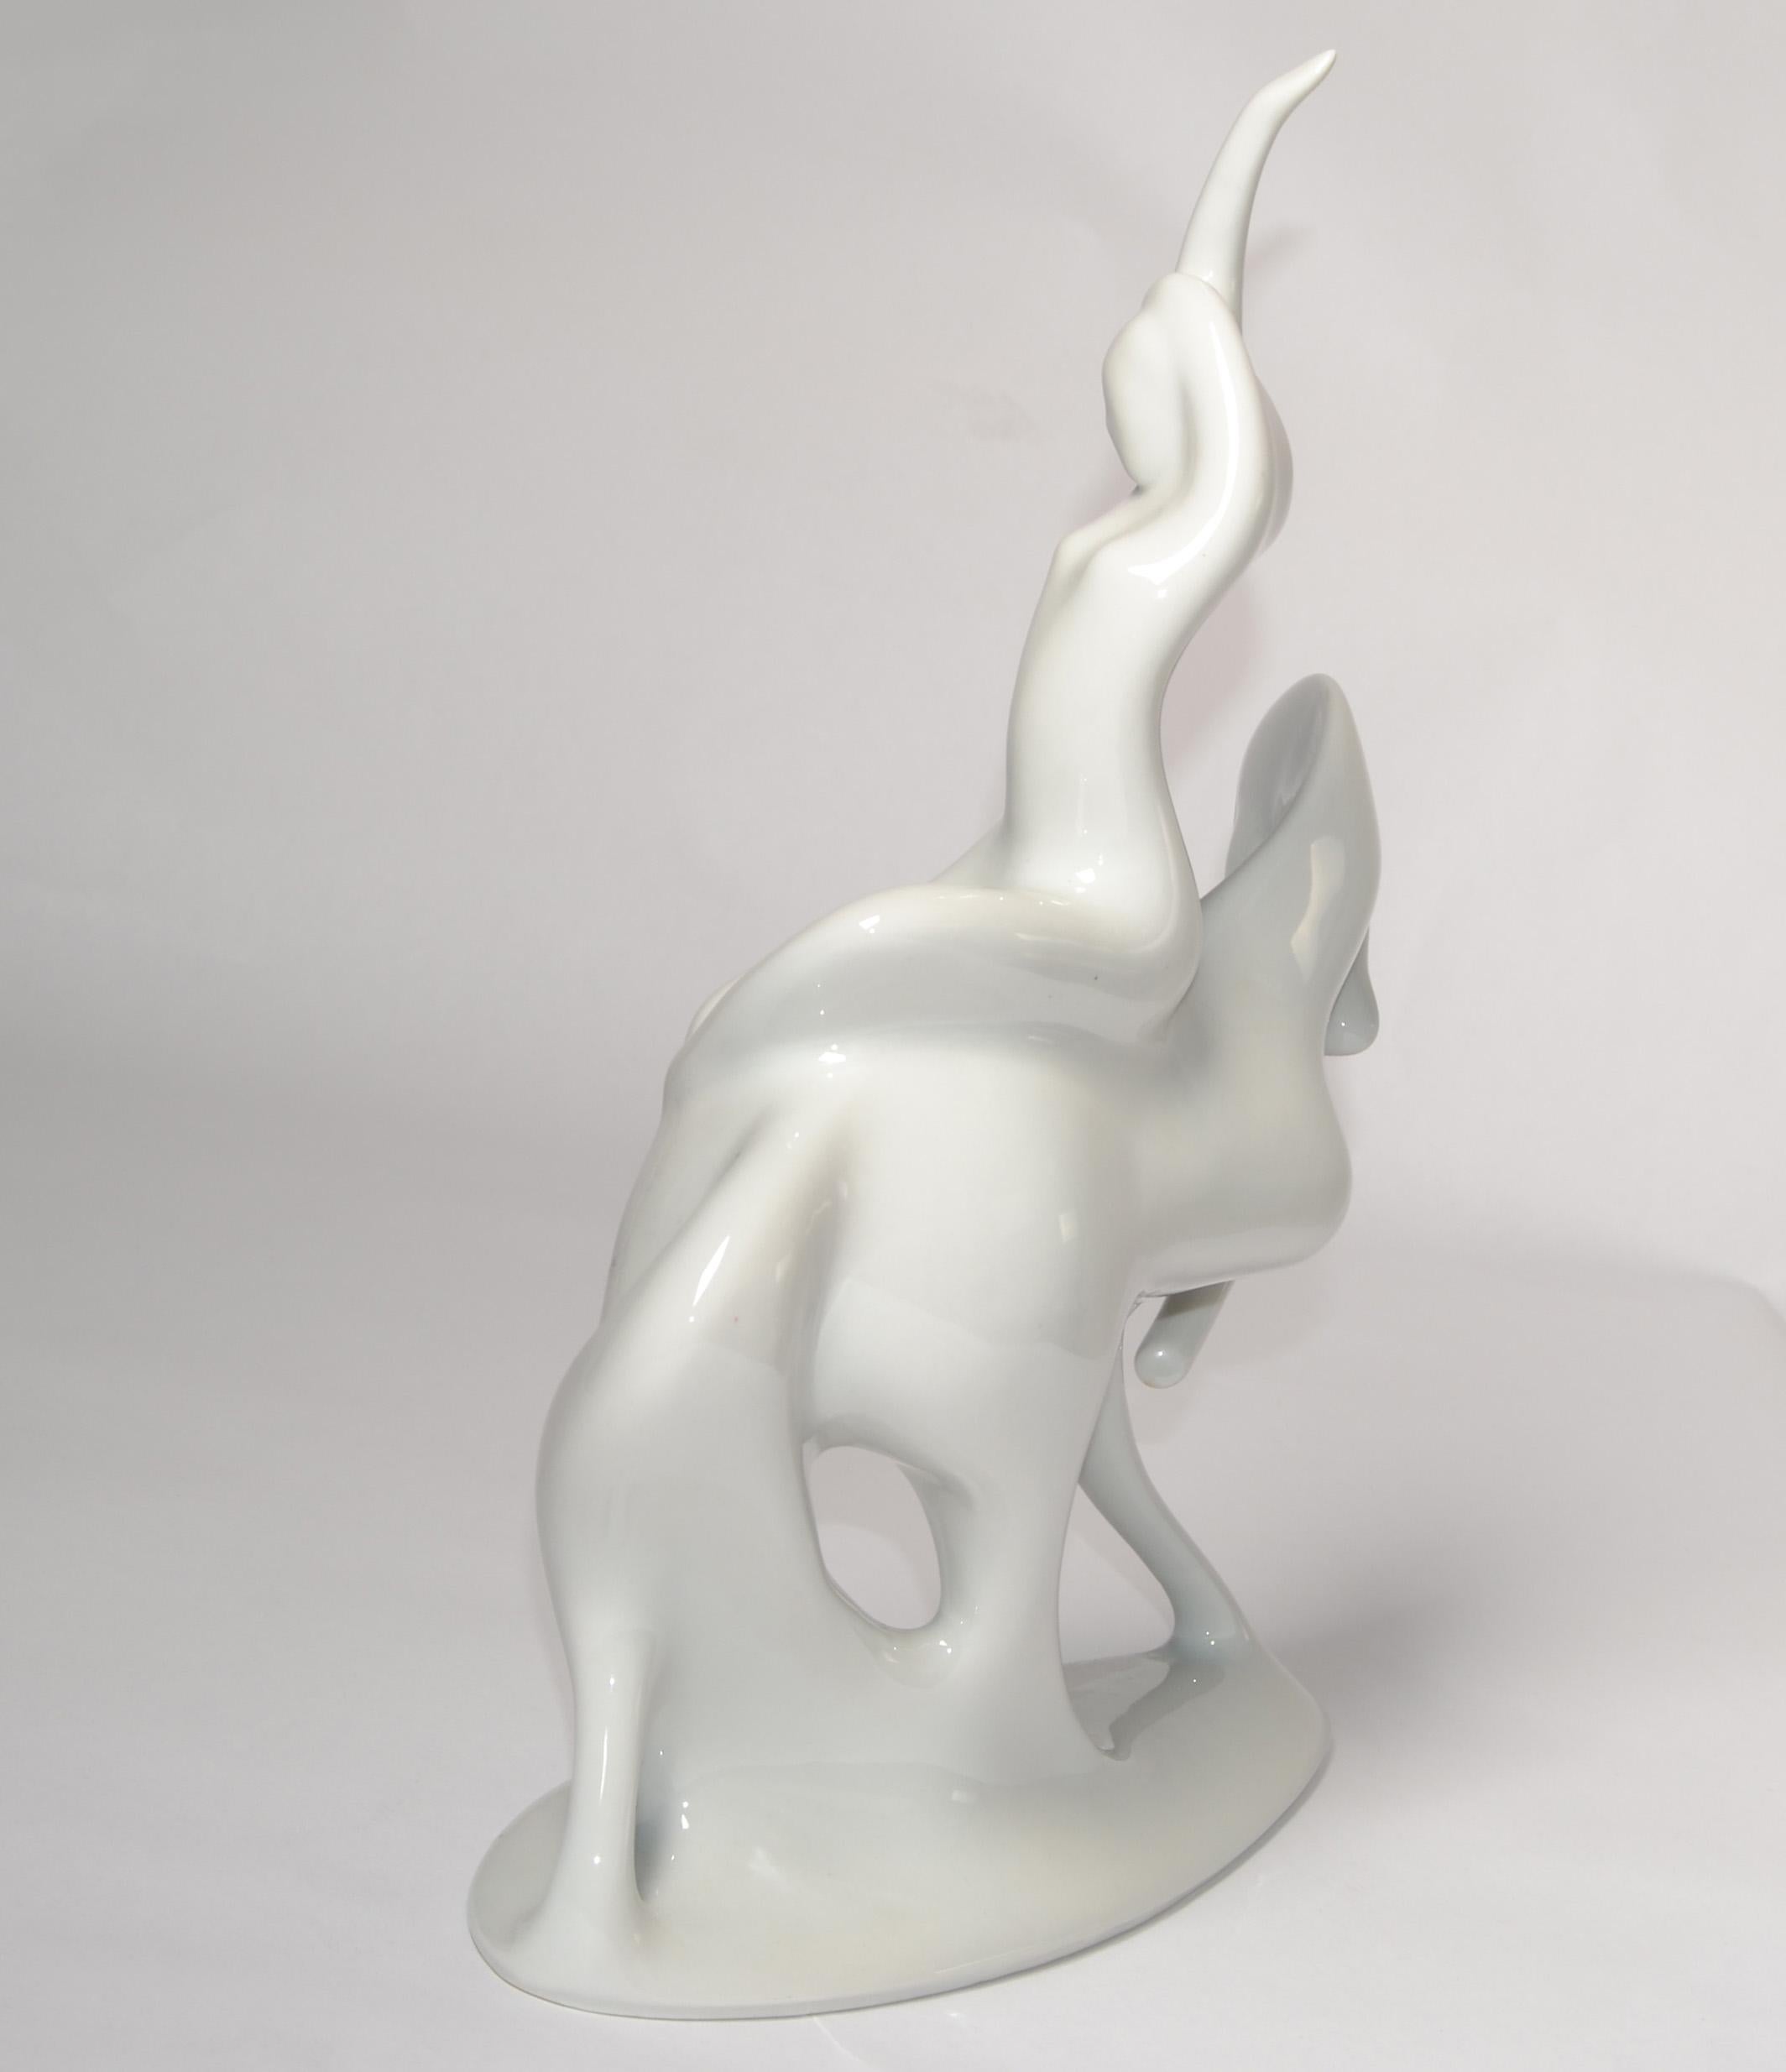 1960s Jitro Porcelain Statue by Jaroslav Ježek for Royal Dux Bohemia Sculpture  For Sale 1